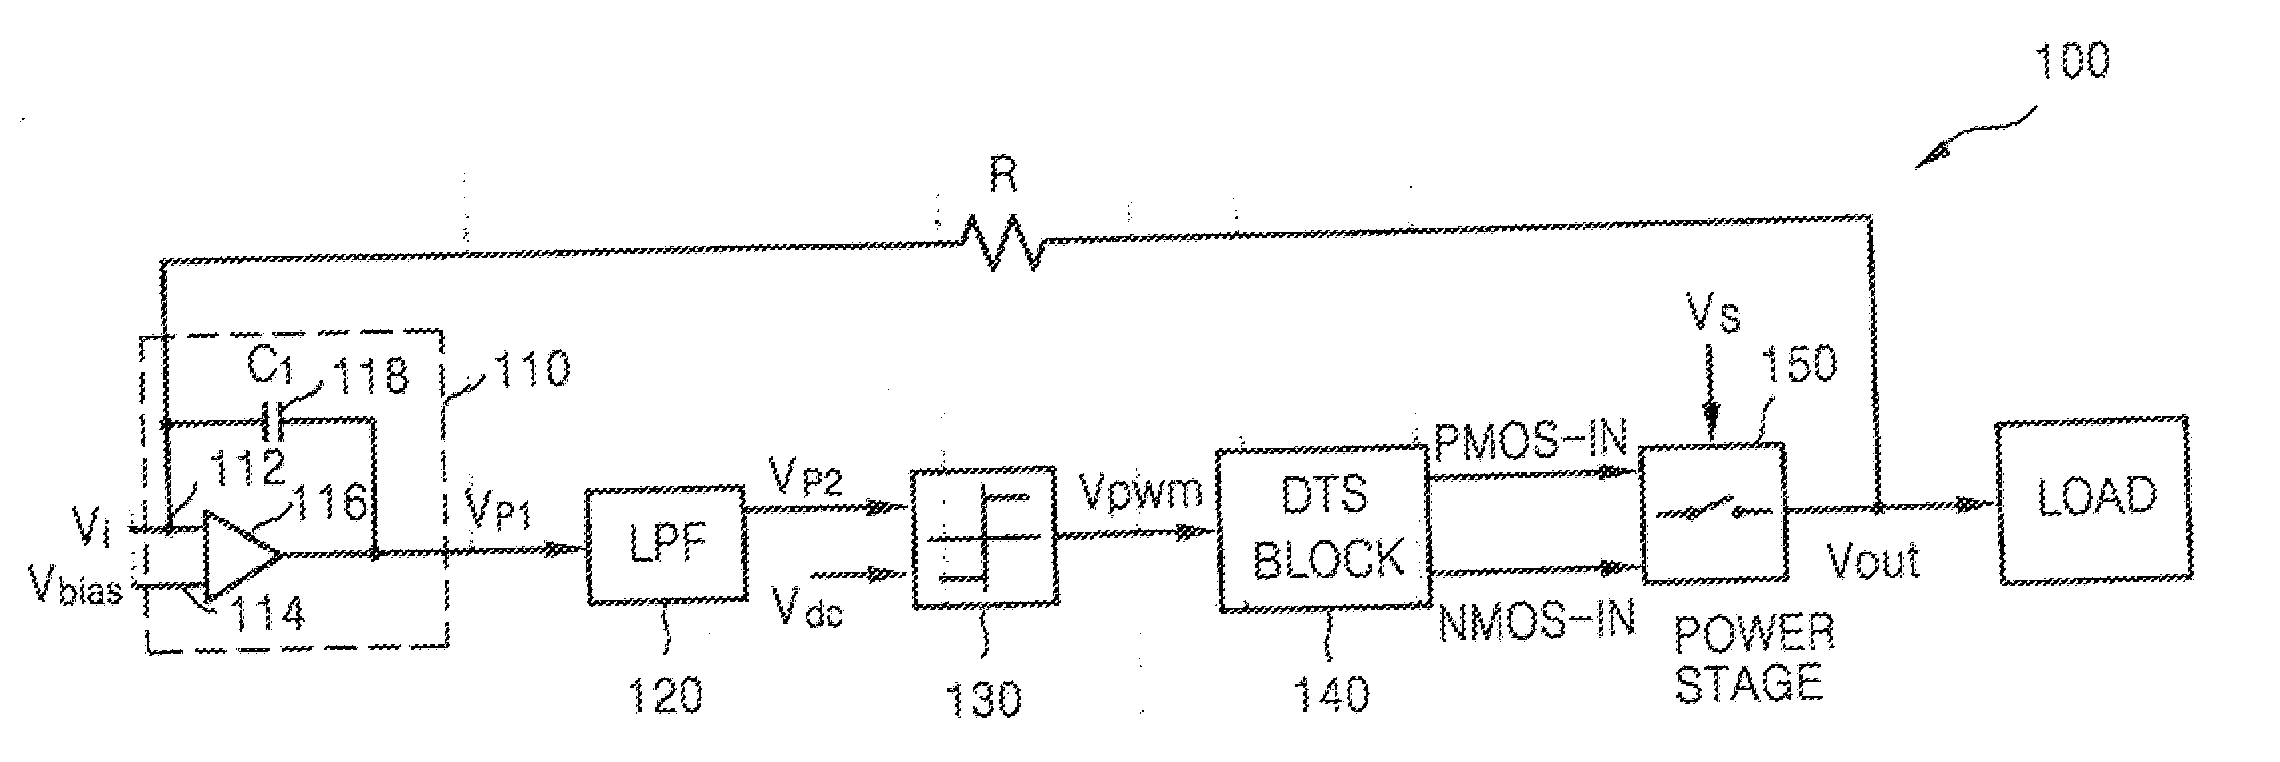 Pwm modulator and class-d amplifier having the same